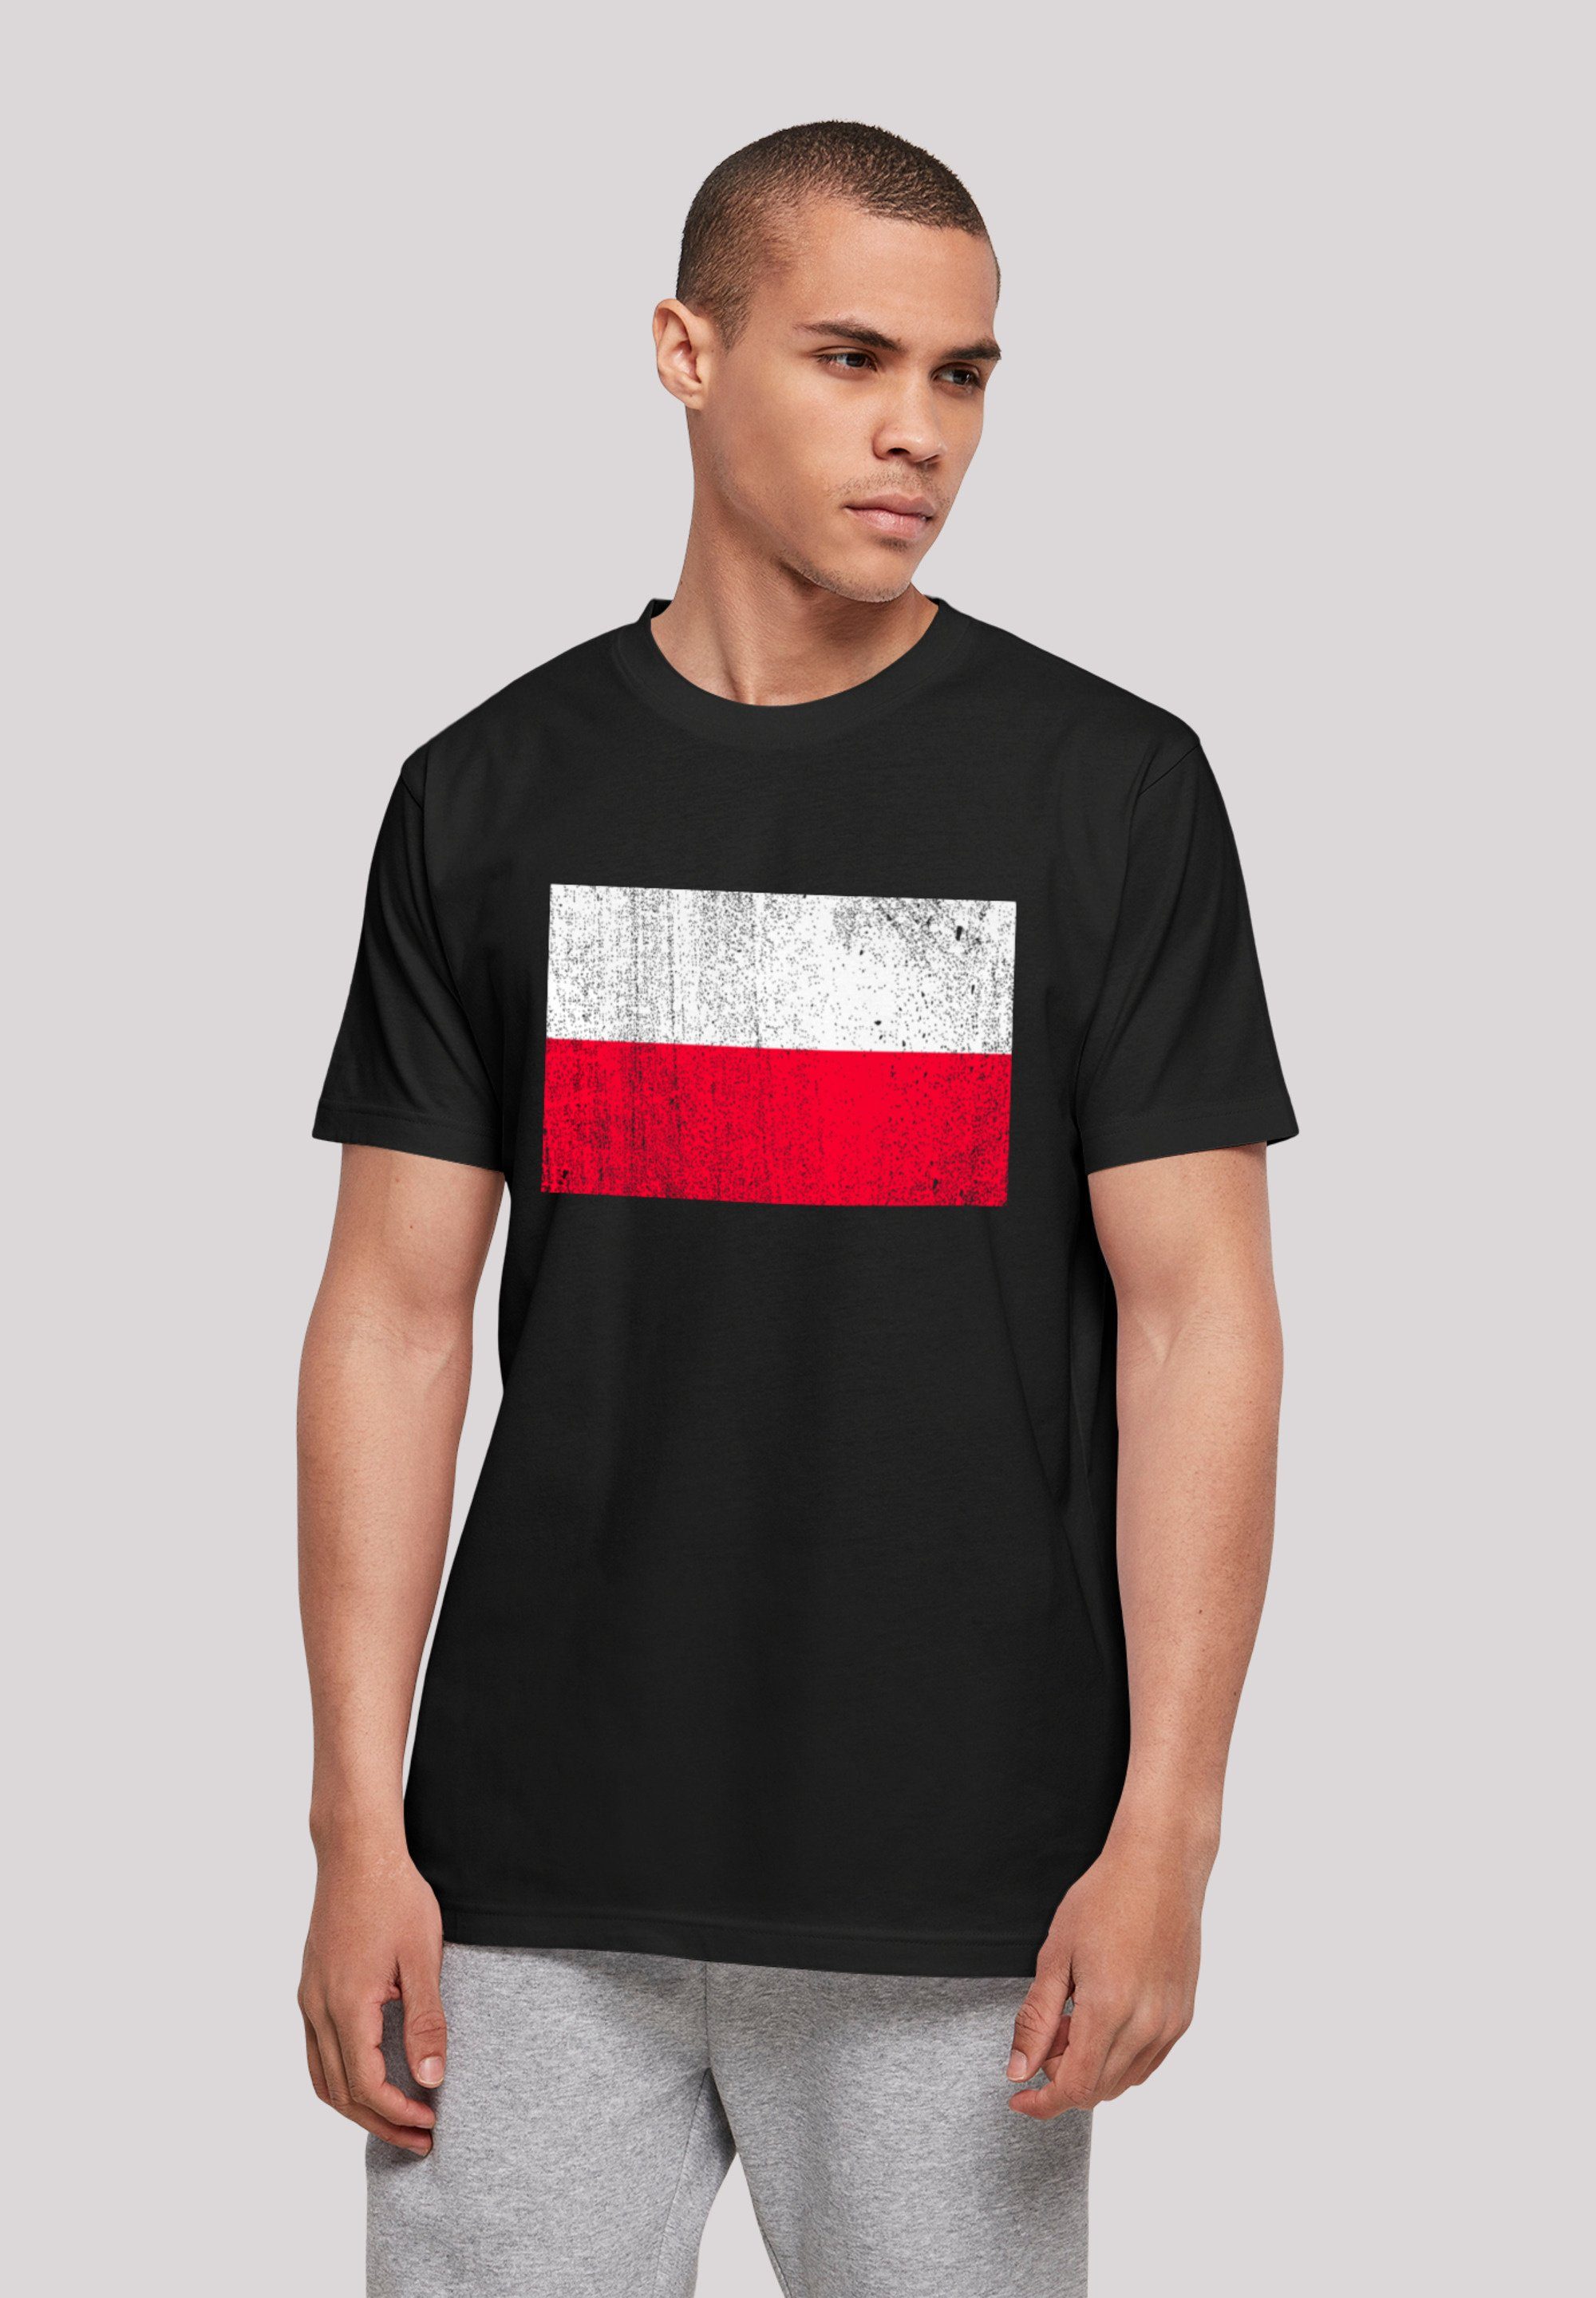 F4NT4STIC T-Shirt Polen Poland schwarz Flagge Print distressed